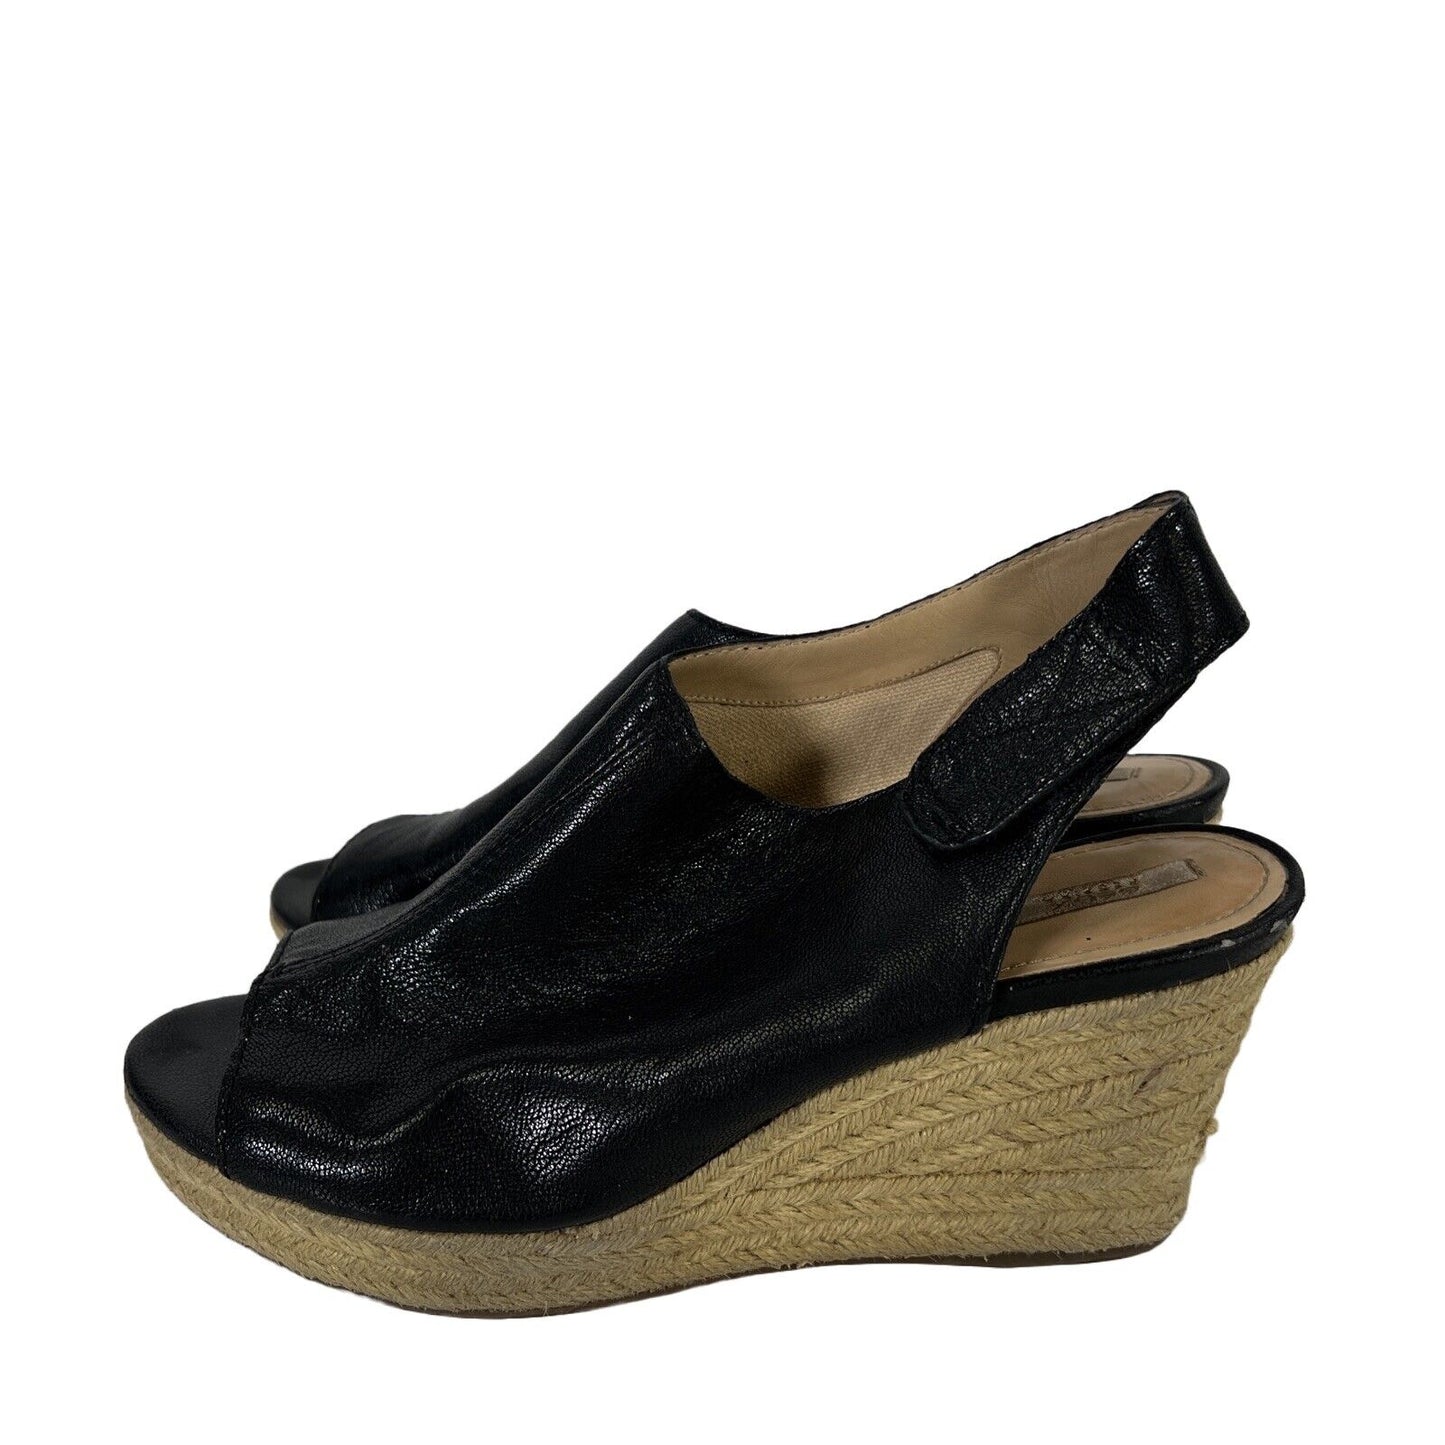 Geox Women's Black/Beige Espadrille Leather Wedge Sandals - 39/ US 9